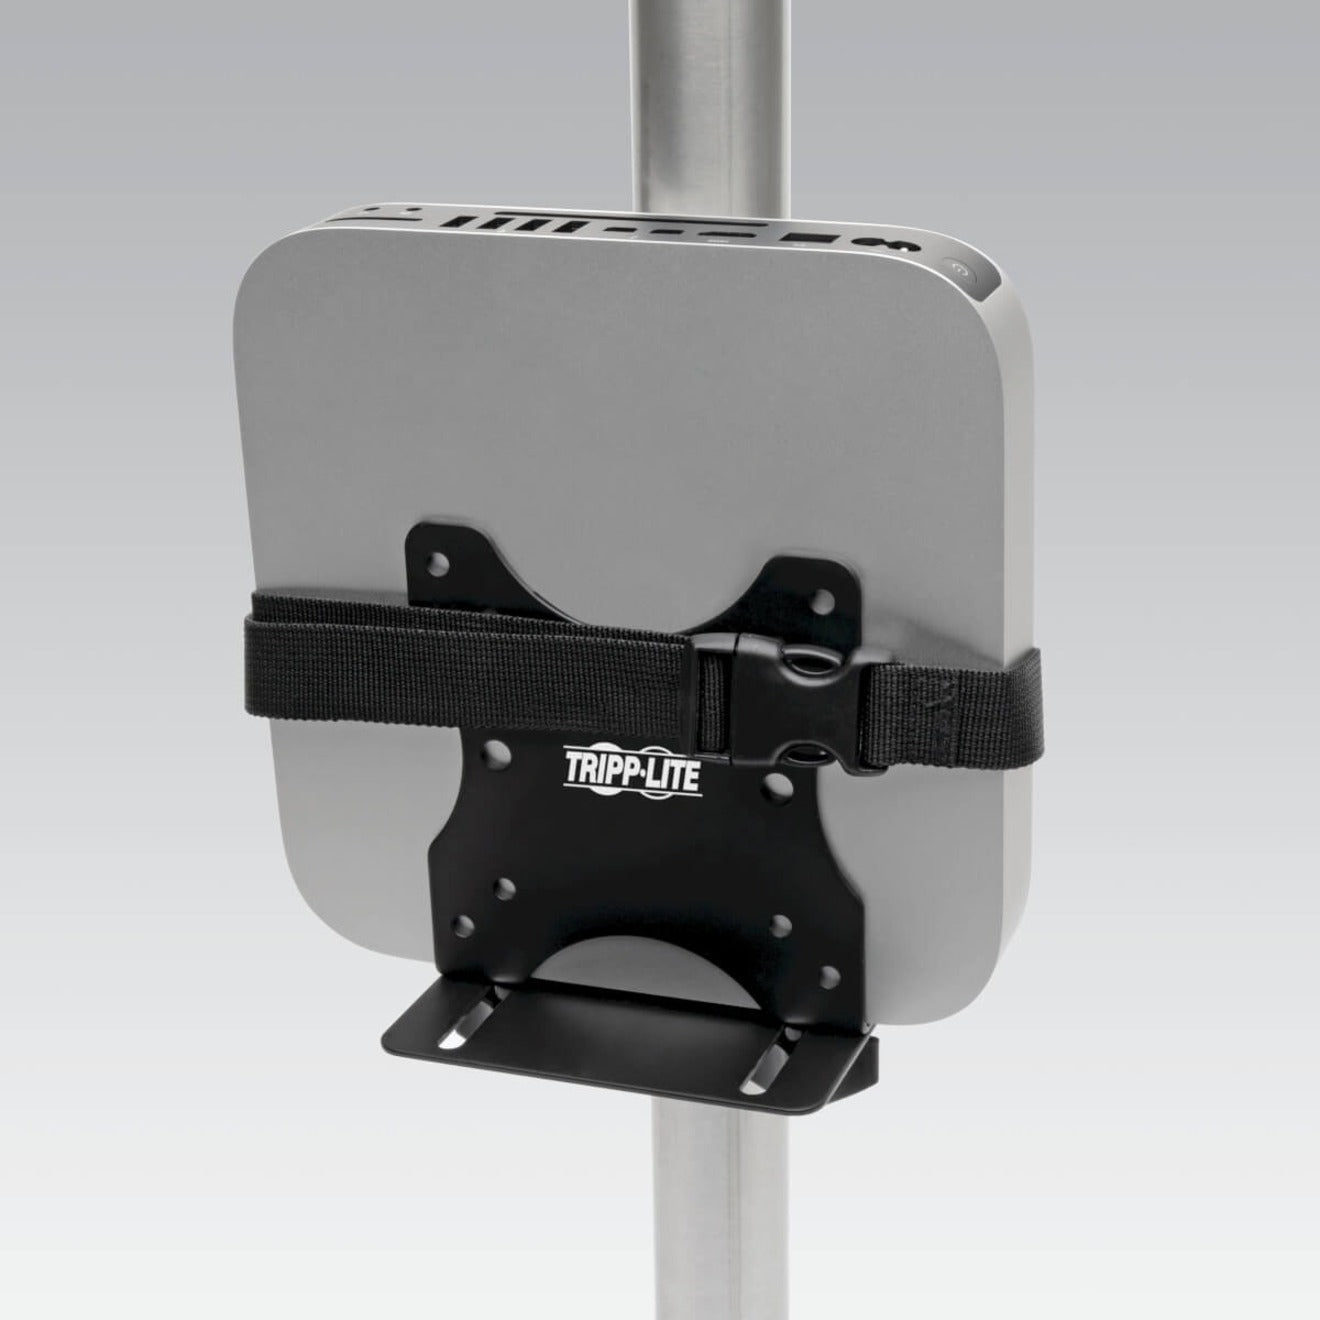 Tripp Lite DMATC Universal Thin Client Monitor Mount, Mounting Adapter Kit, 11.02 lb Maximum Load Capacity, Black Powder Coat